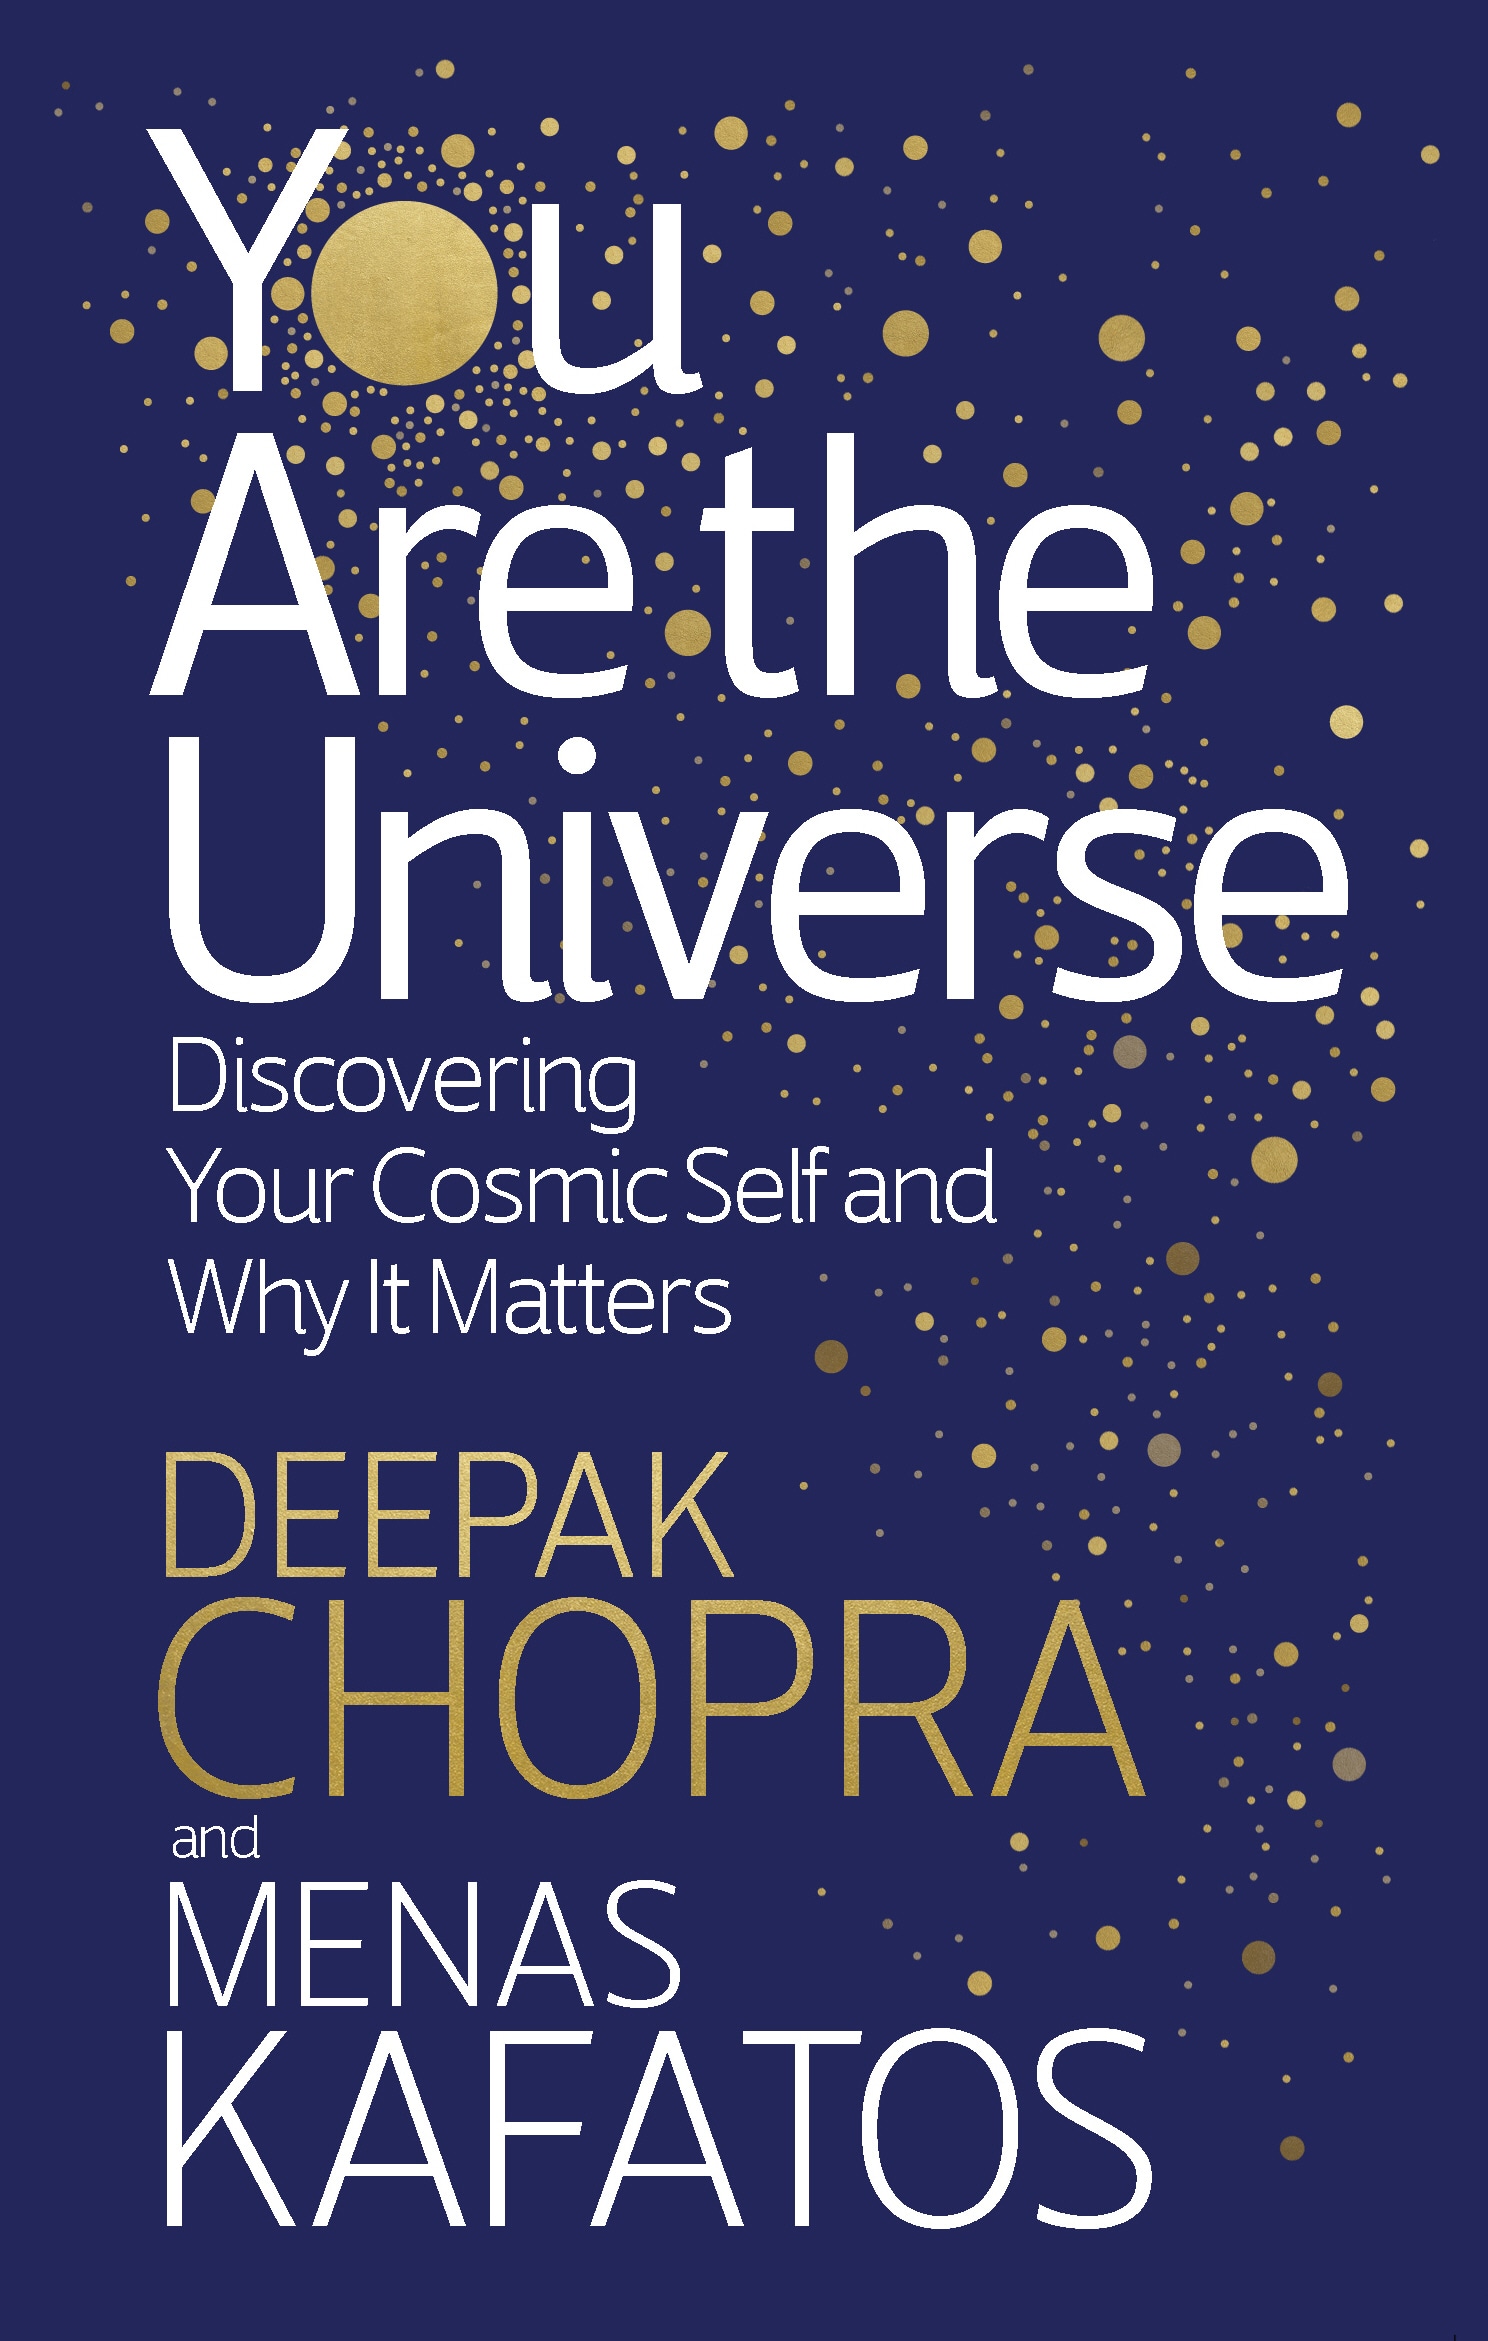 Book “You Are the Universe” by Deepak Chopra, Menas Kafatos — July 5, 2018